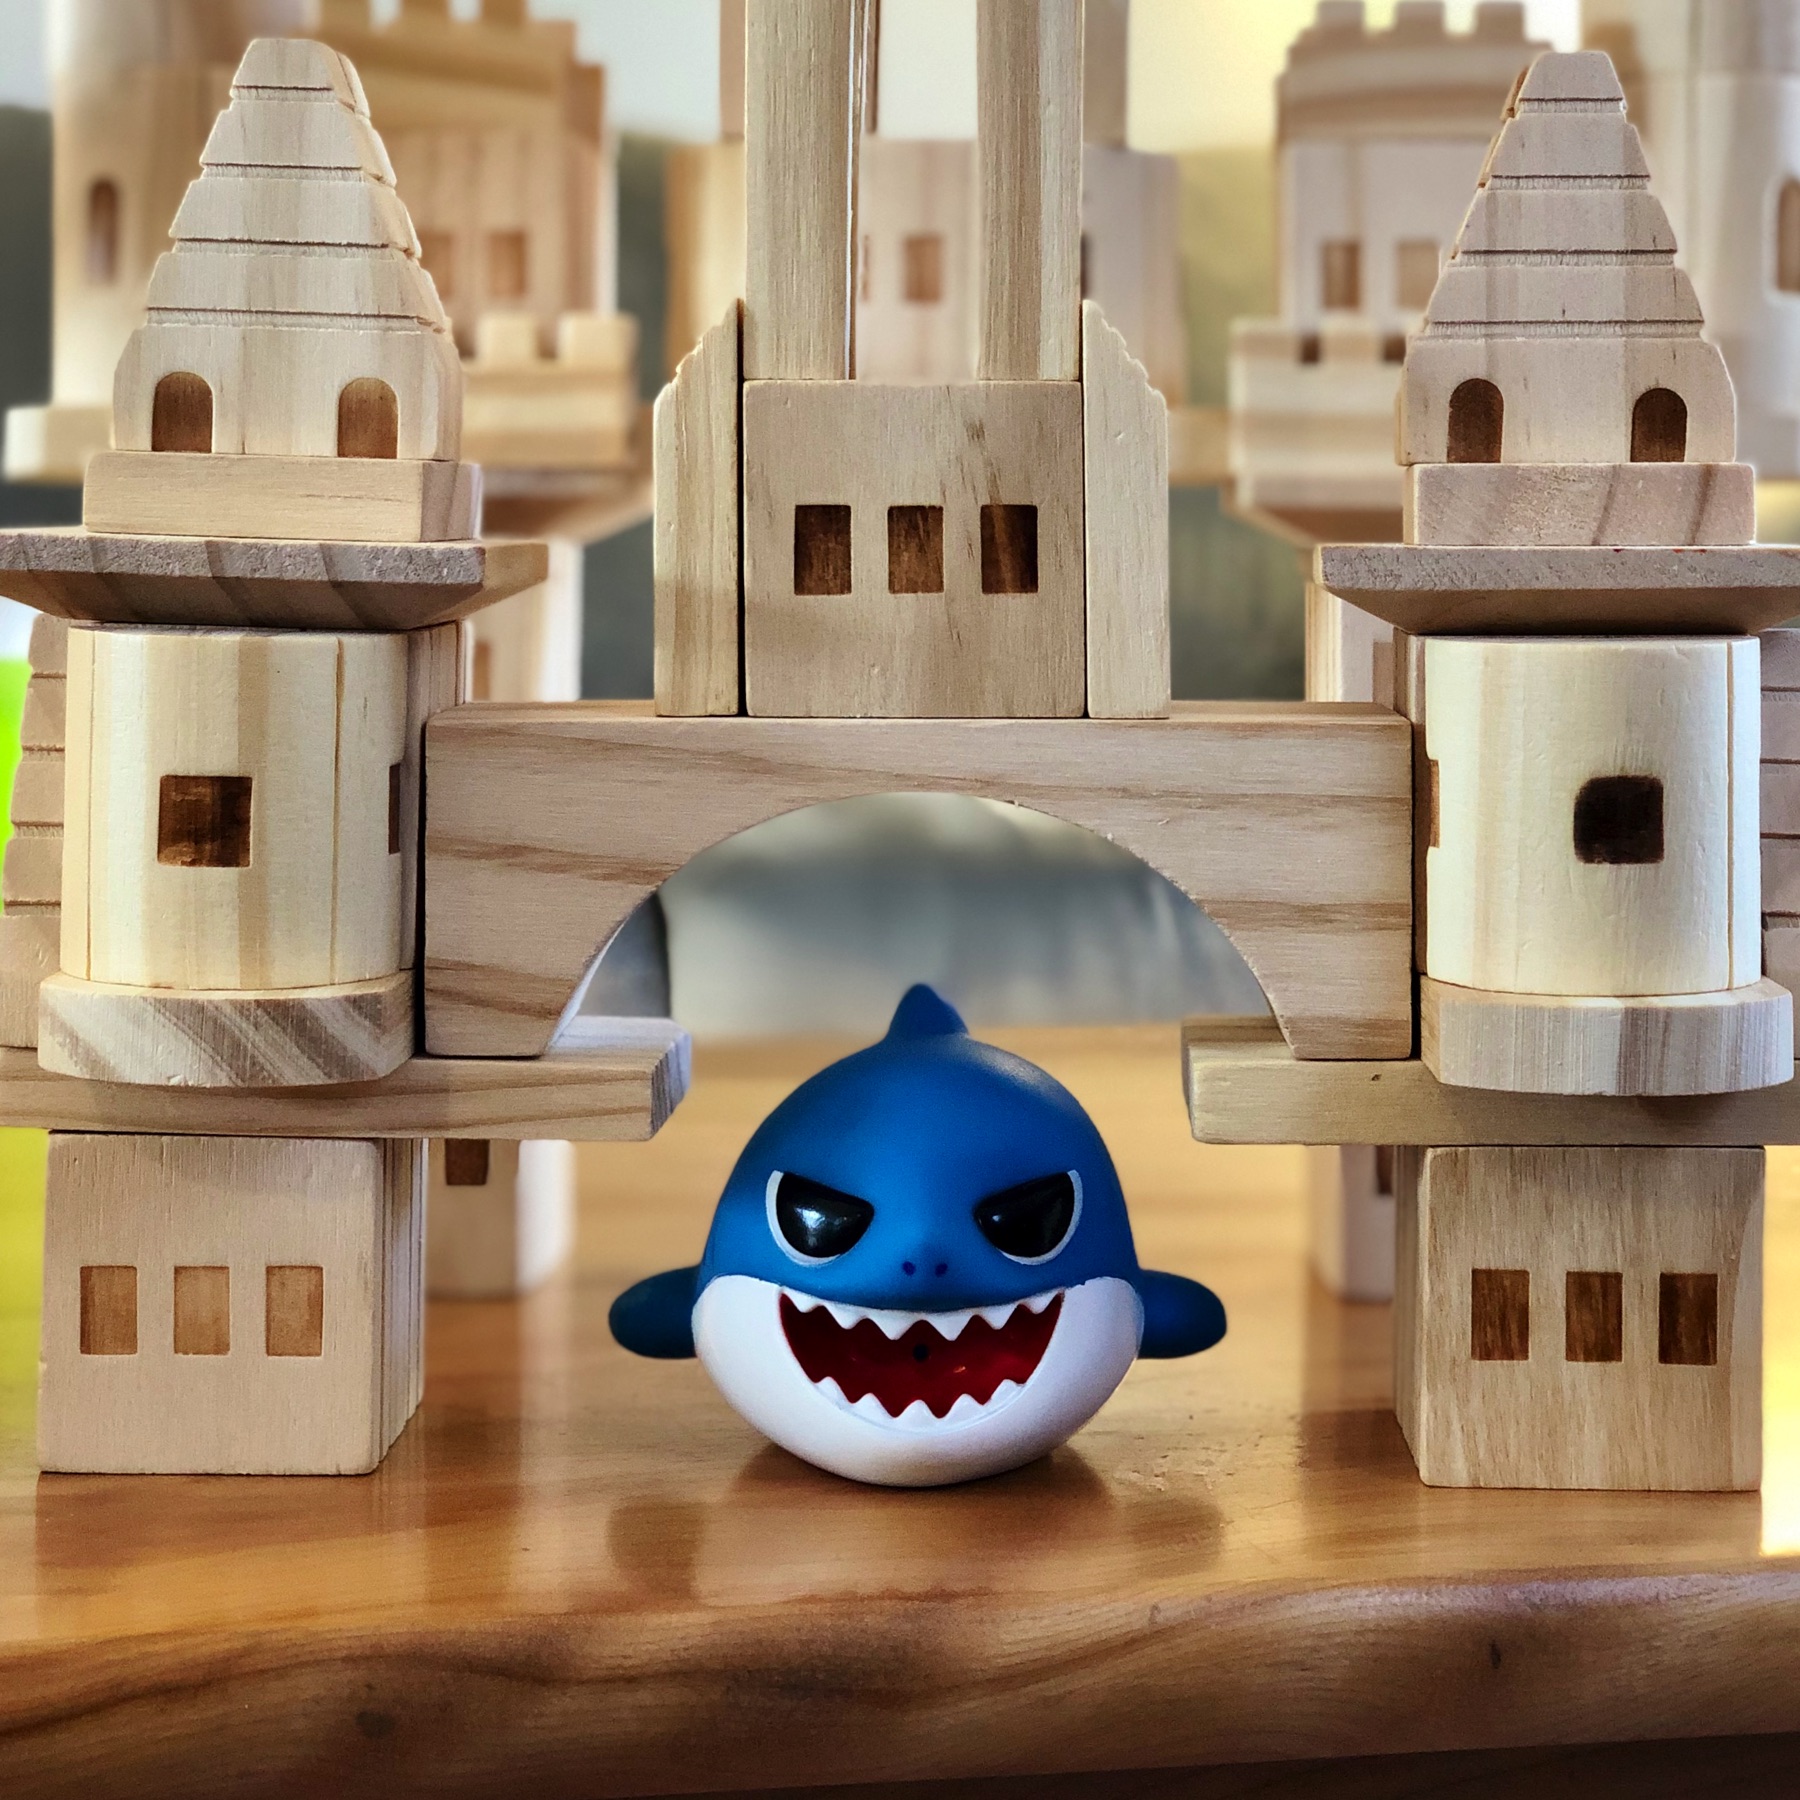 Daddy Shark hiding in a castle.